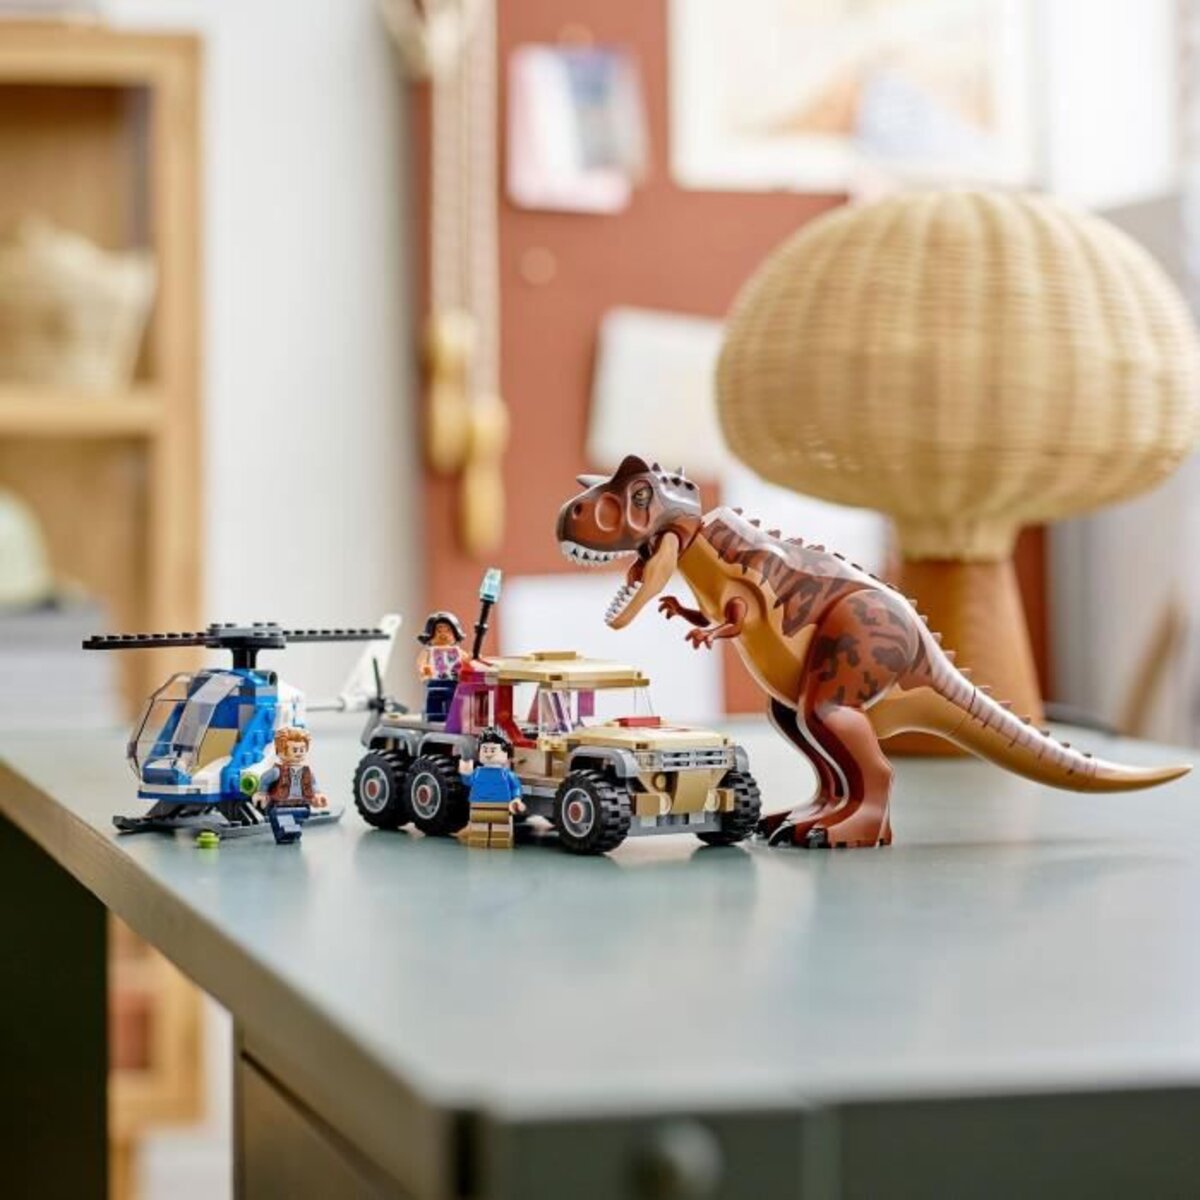 Lego 76939 jurassic world l'évasion du stygimoloch dinosaure jouet